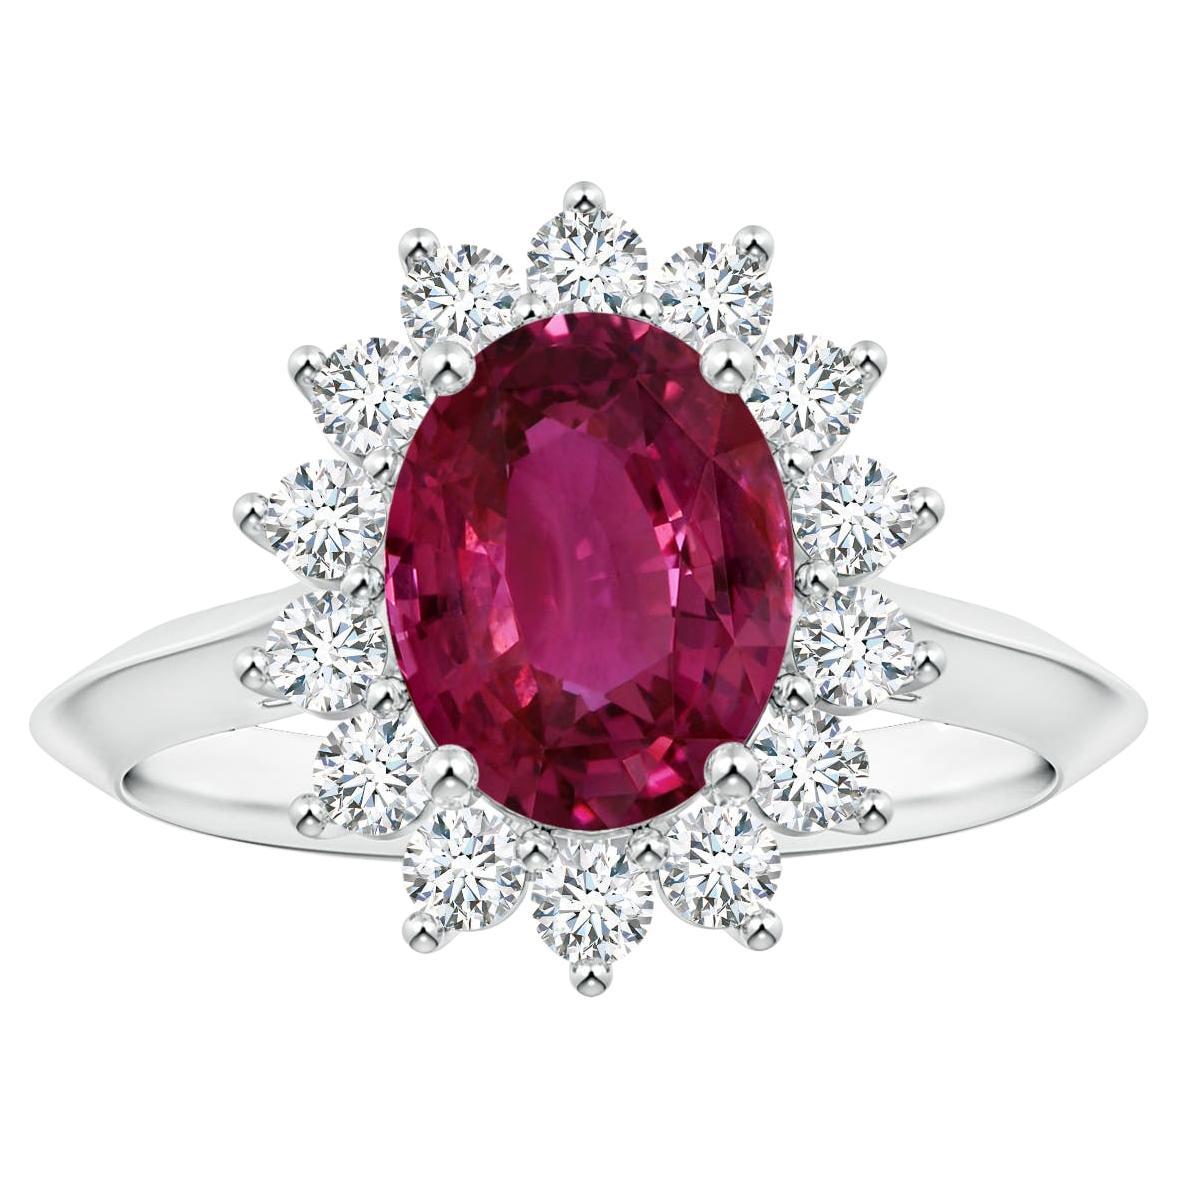 ANGARA Princess Diana Inspired GIA Certified Pink Sapphire Ring in Platinum